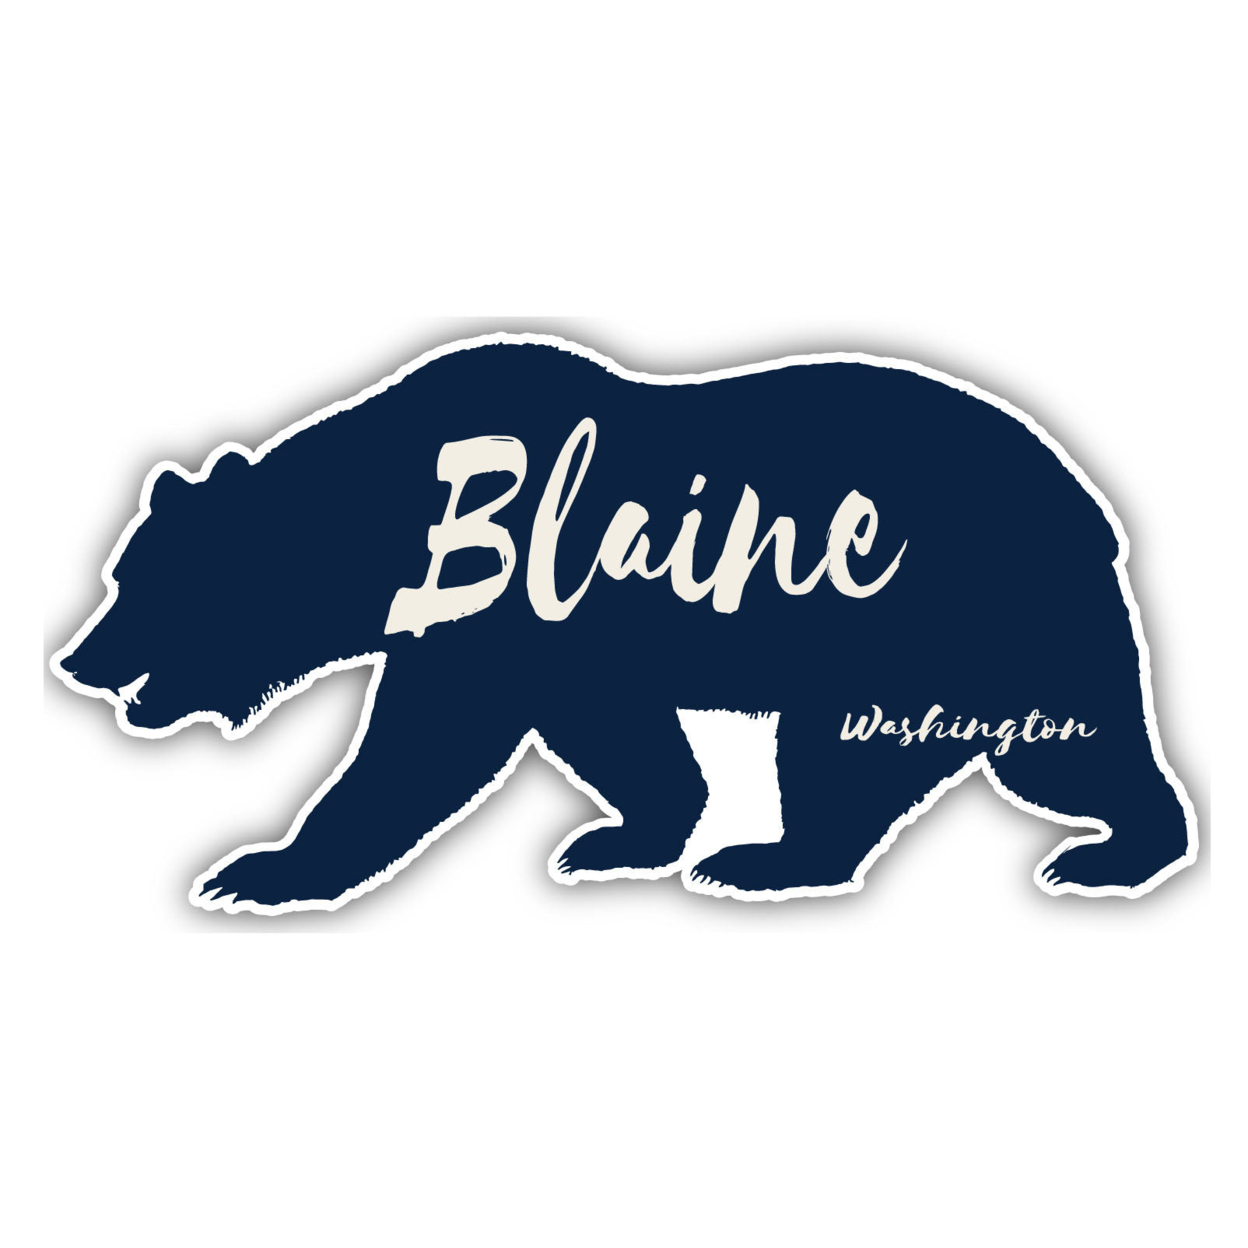 Blaine Washington Souvenir Decorative Stickers (Choose Theme And Size) - 4-Pack, 12-Inch, Adventures Awaits